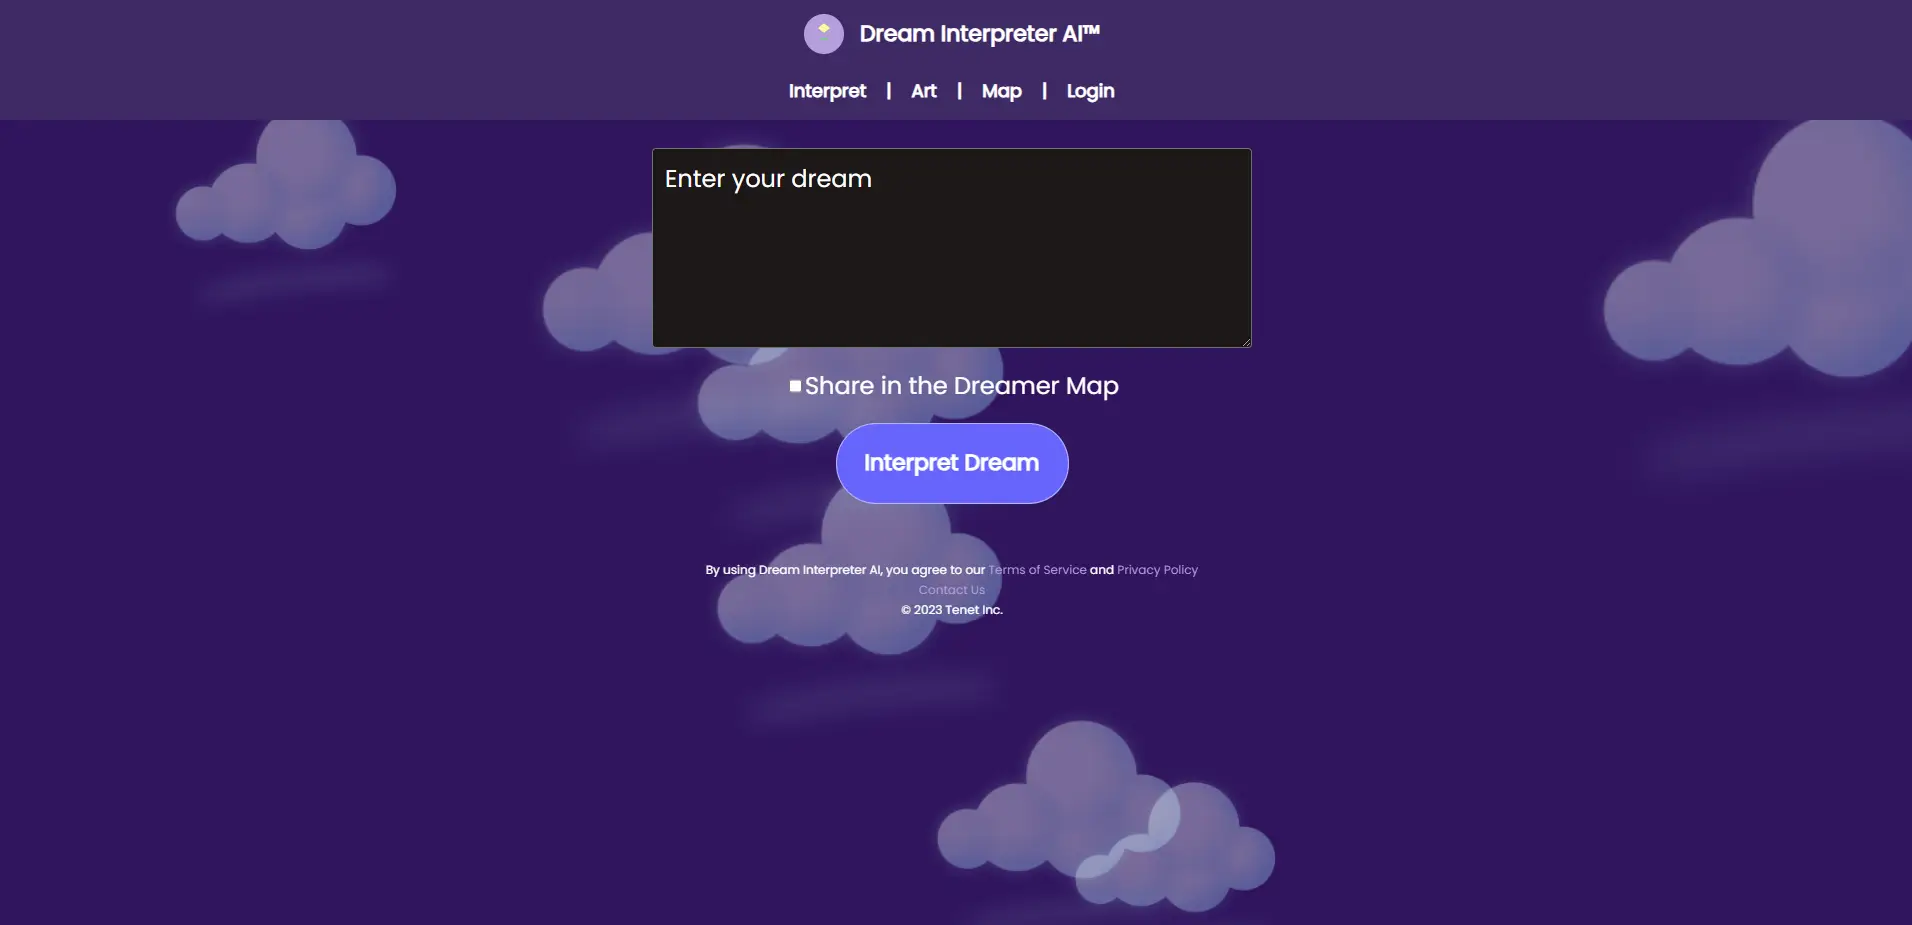 Dream Interpreter AIwebsite picture